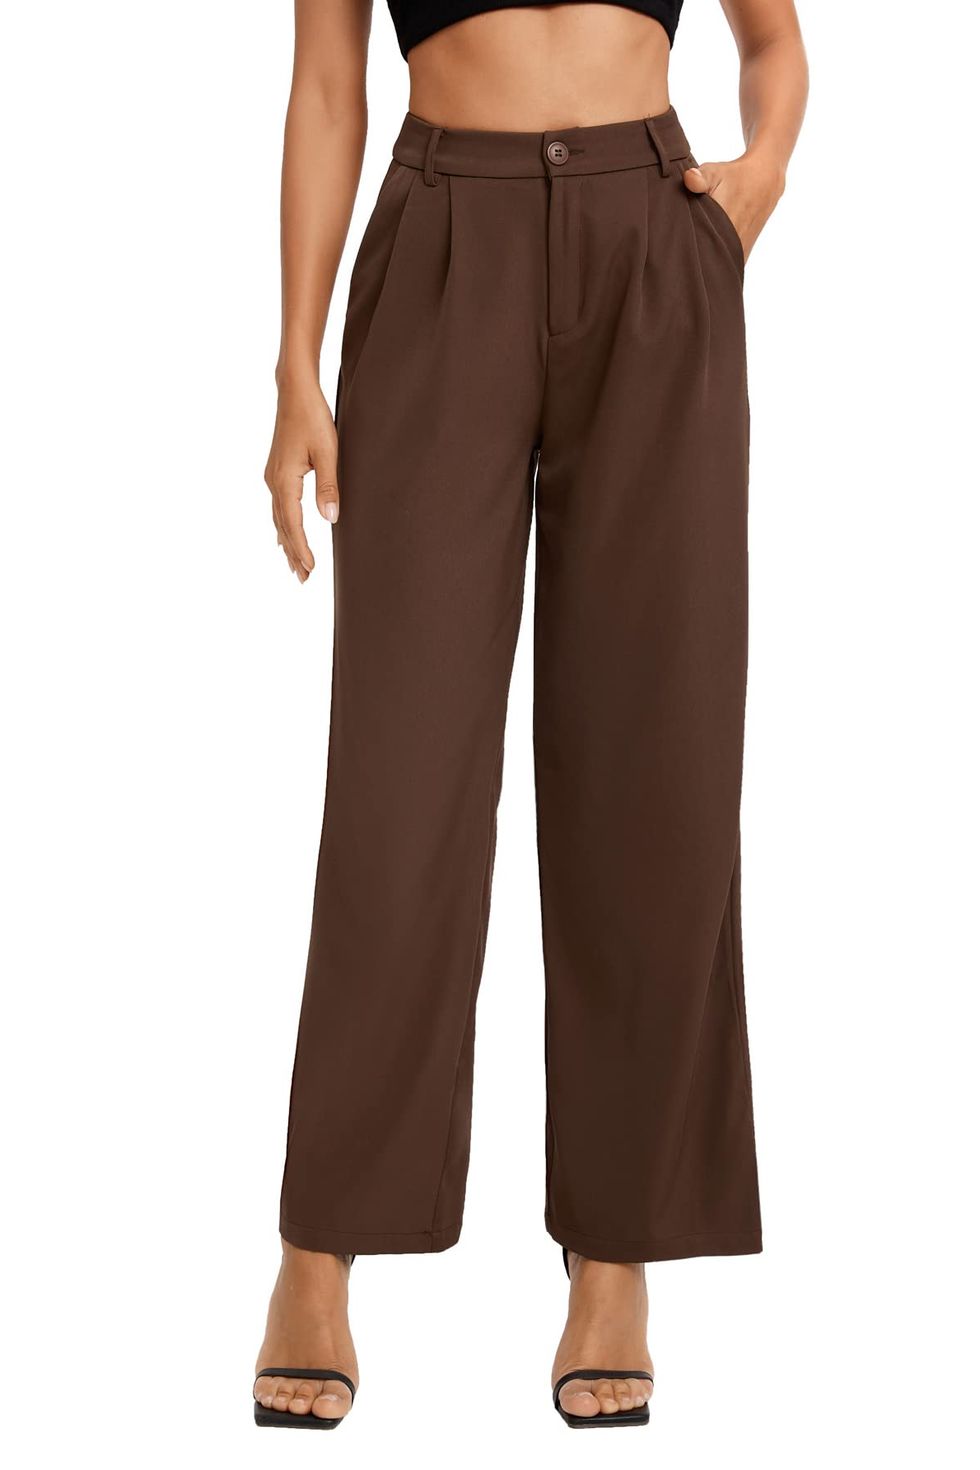 SweatyRocks Women's Elegant High Waist Belted Pants Straight Leg Office  Suit Pants Trousers Black S at  Women's Clothing store